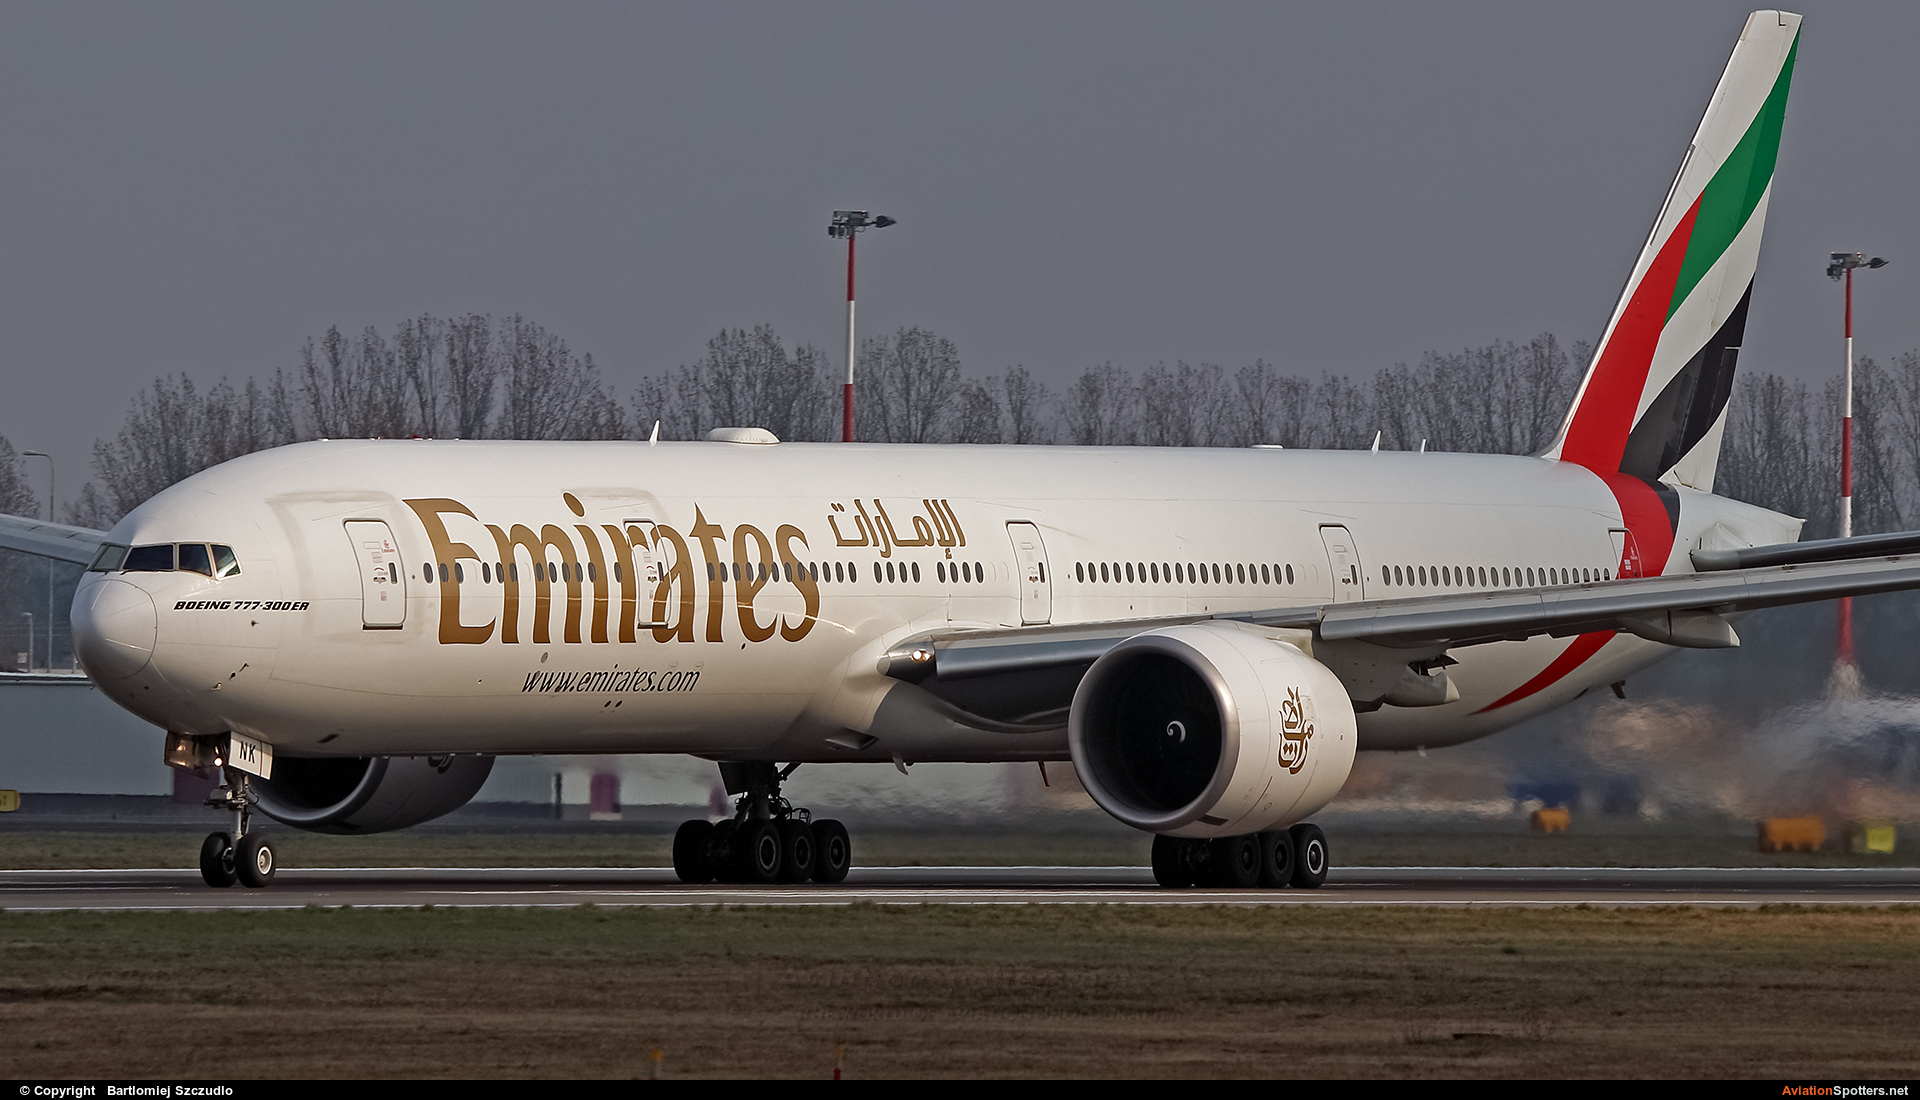 Emirates Airlines  -  777-300ER  (A6-ENK) By Bartlomiej Szczudlo  (BartekSzczudlo)